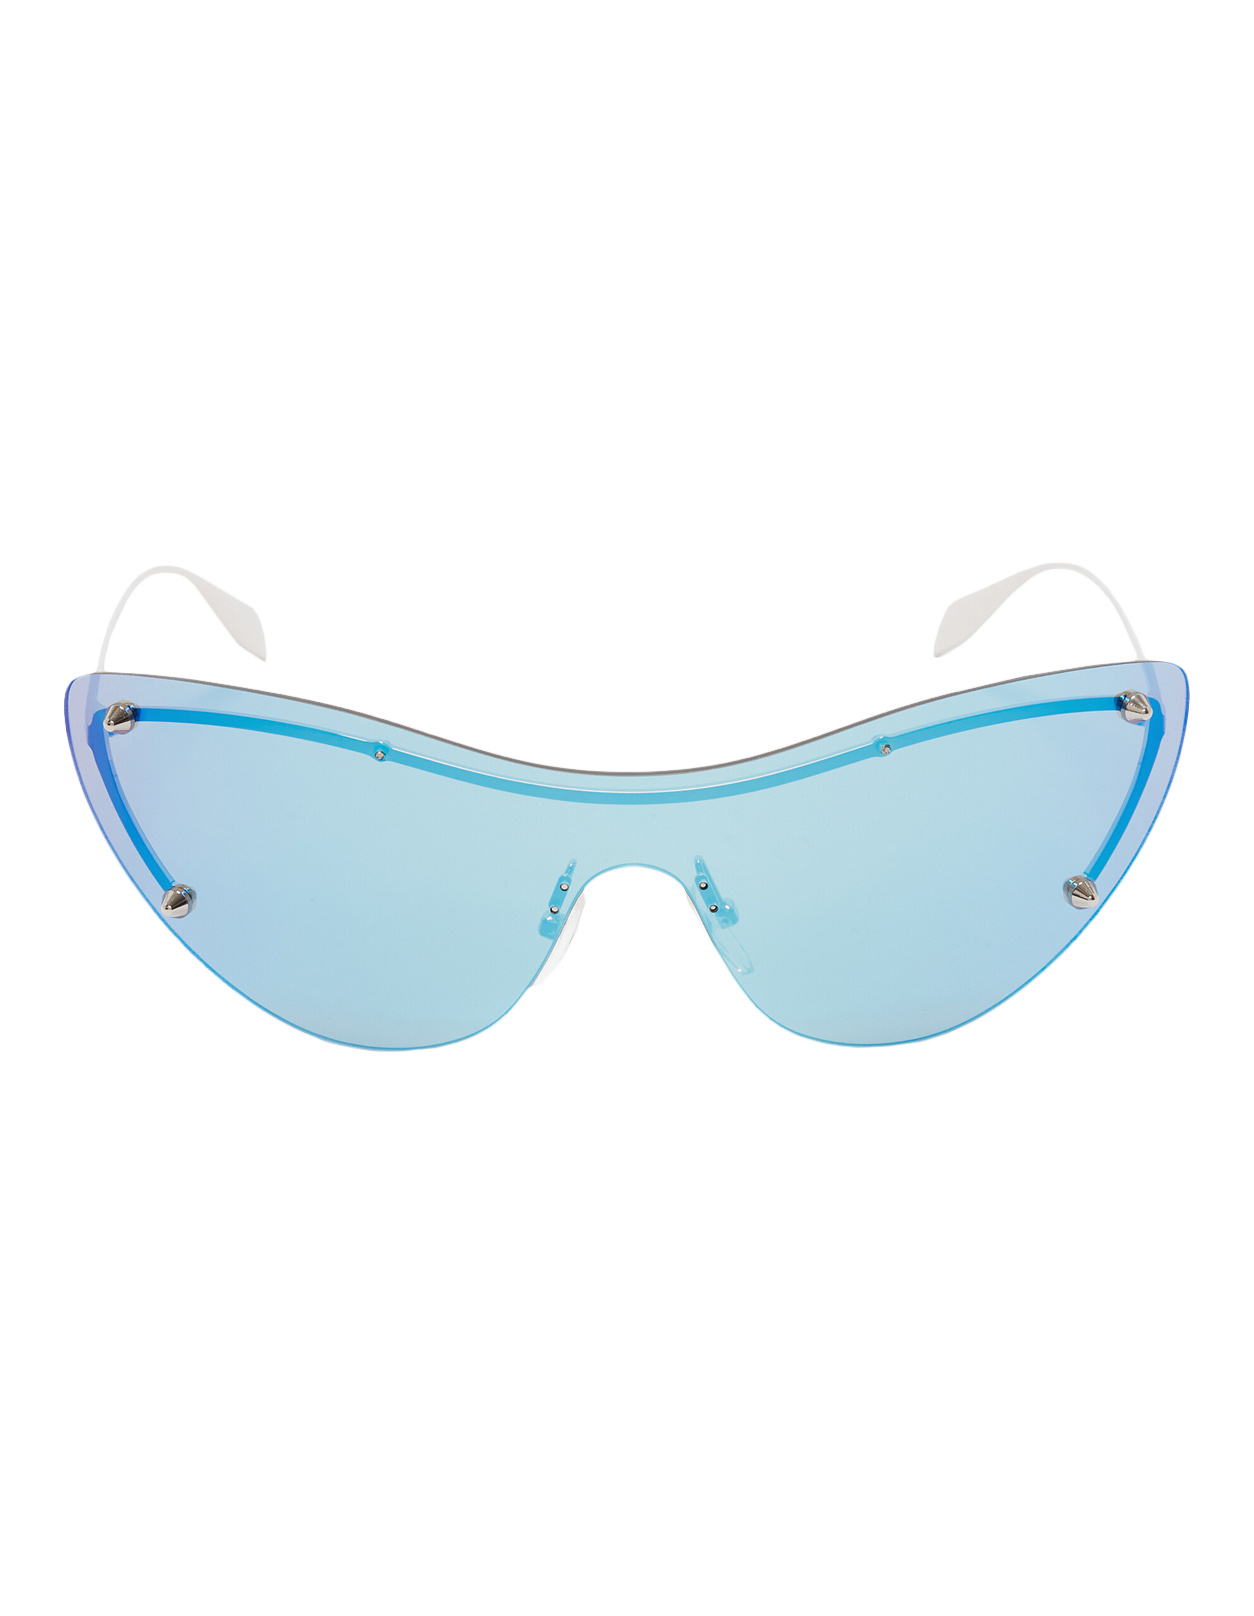 Spike Studs Mask Sunglasses in Smoke/Silver